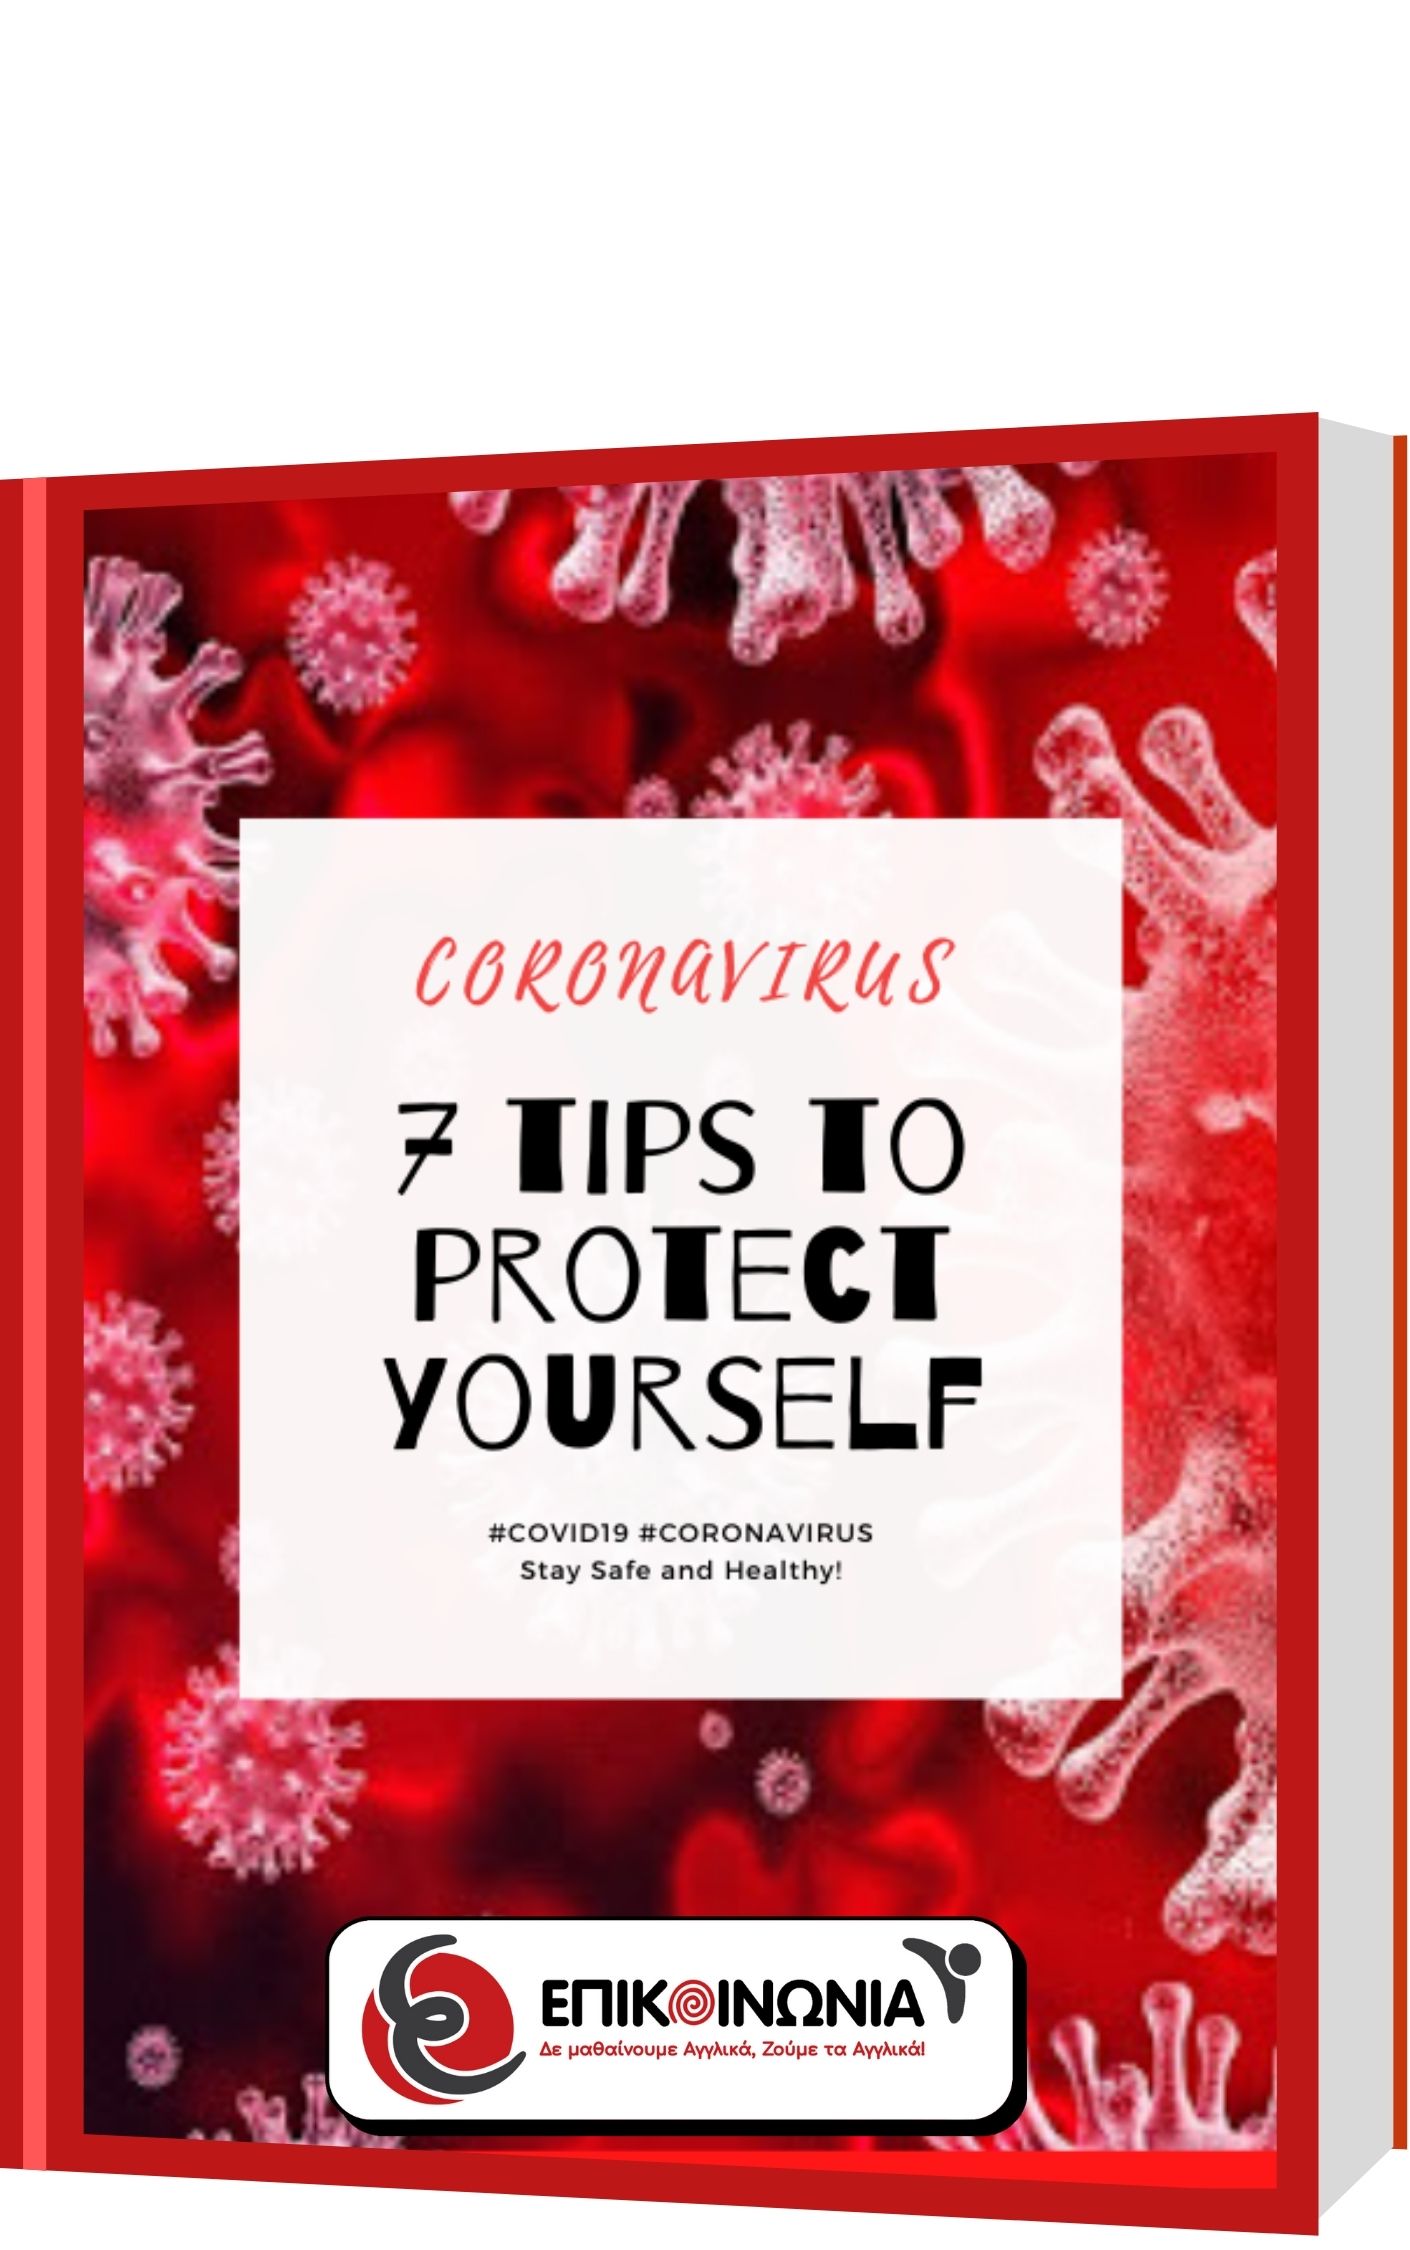 Coronavirus:7 tips to protect yourself